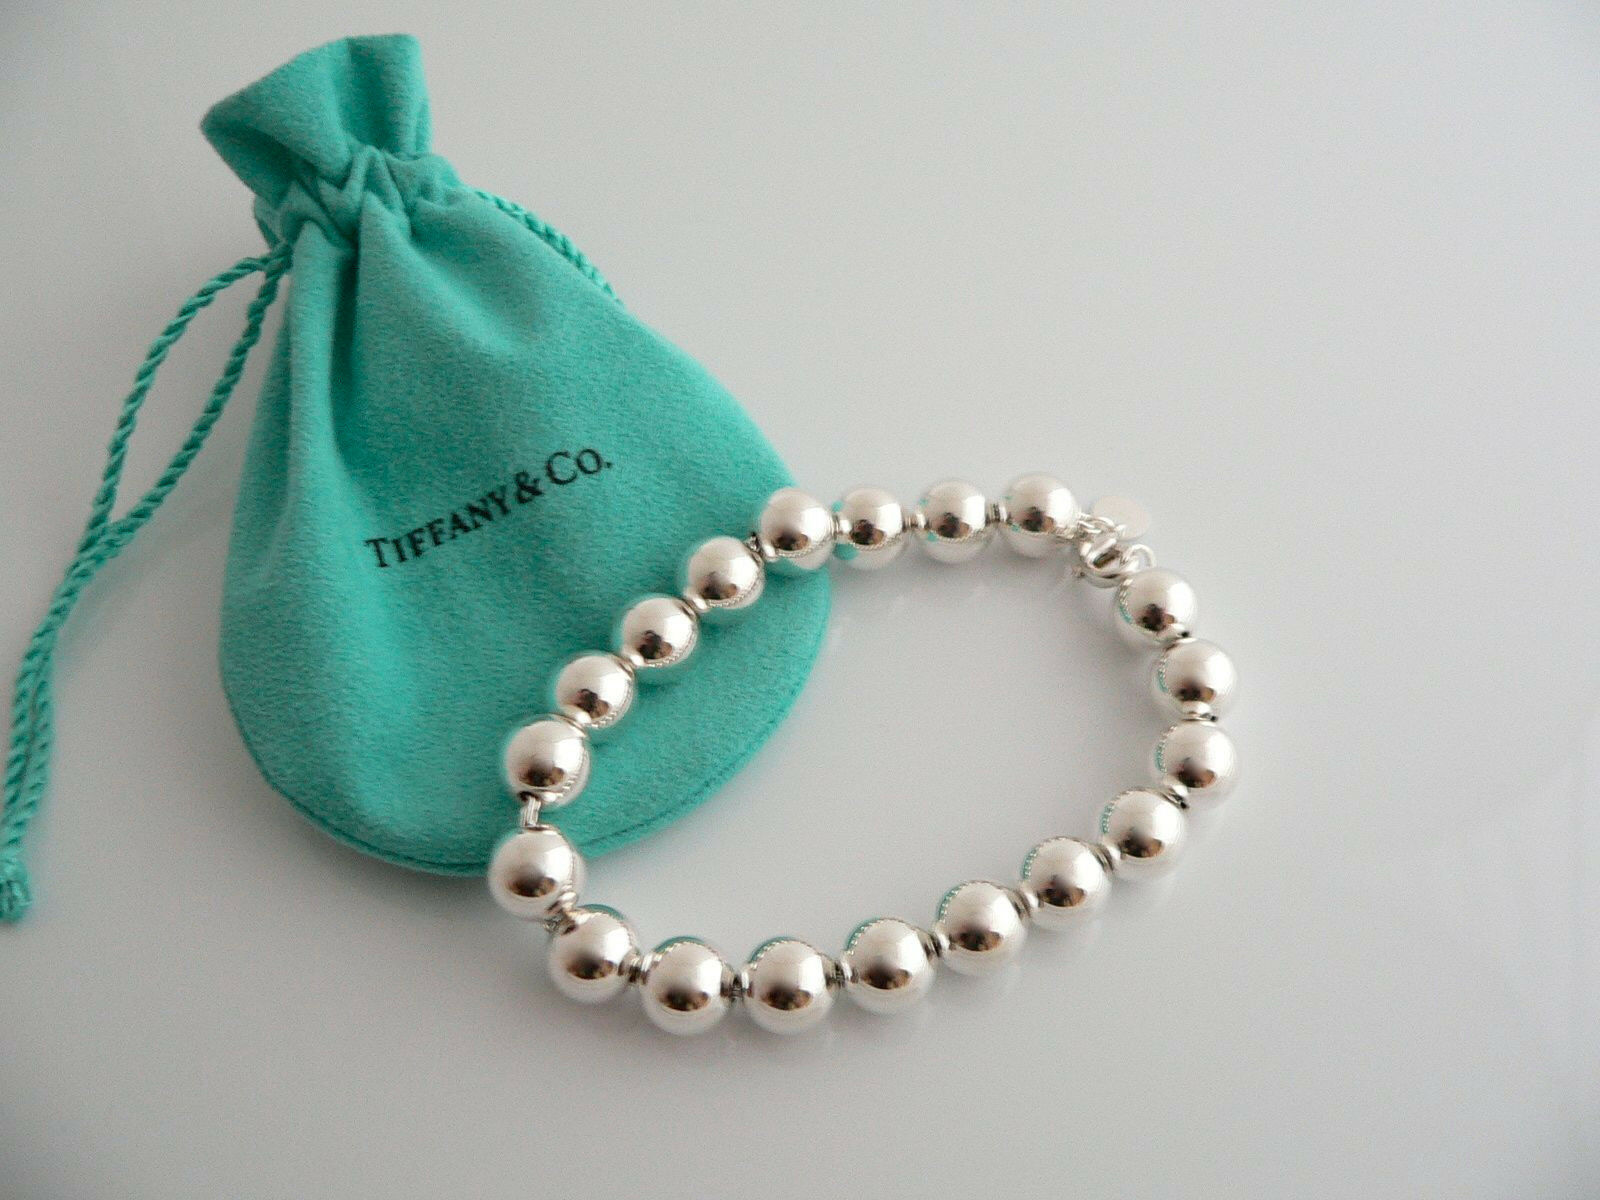 Tiffany & Co Silver Ball Bead Bracelet Bangle 8 Inch Longer Length Gift Pouch